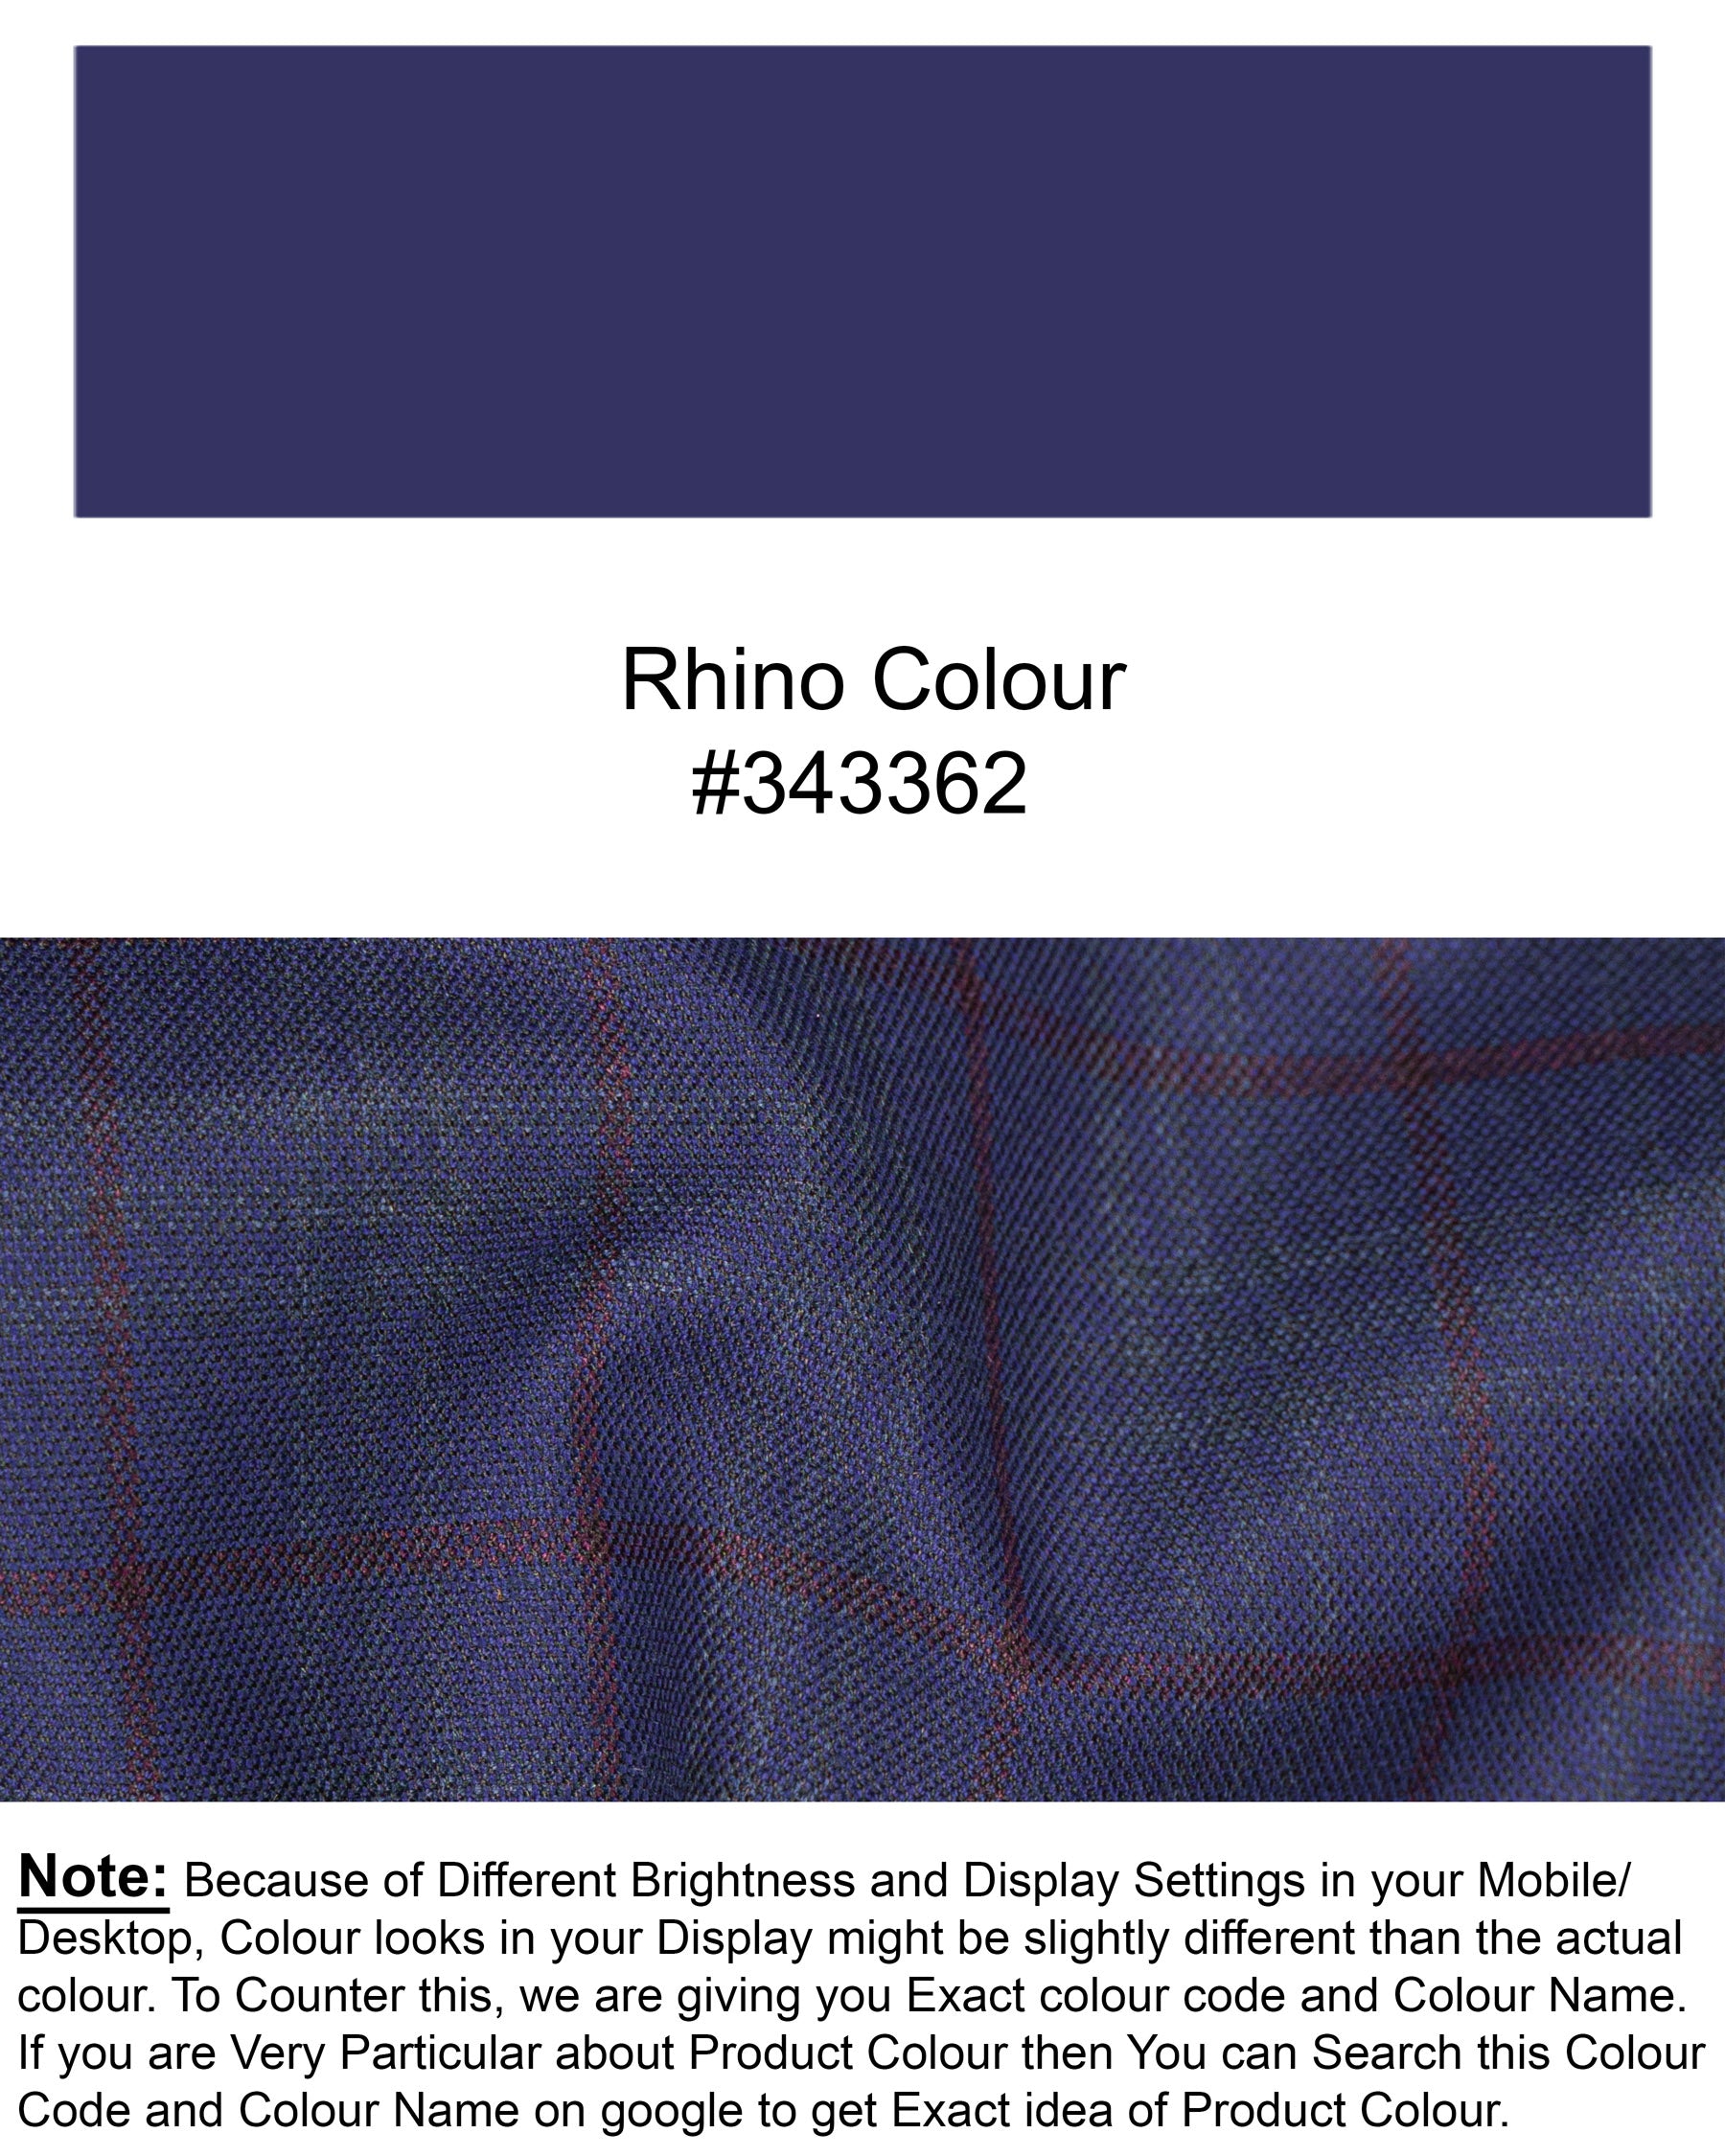 Rhino Blue Plaid Double Breasted Wool Rich Suit ST1565-DB-36, ST1565-DB-38, ST1565-DB-40, ST1565-DB-42, ST1565-DB-44, ST1565-DB-46, ST1565-DB-48, ST1565-DB-50, ST1565-DB-52, ST1565-DB-54, ST1565-DB-56, ST1565-DB-58, ST1565-DB-60